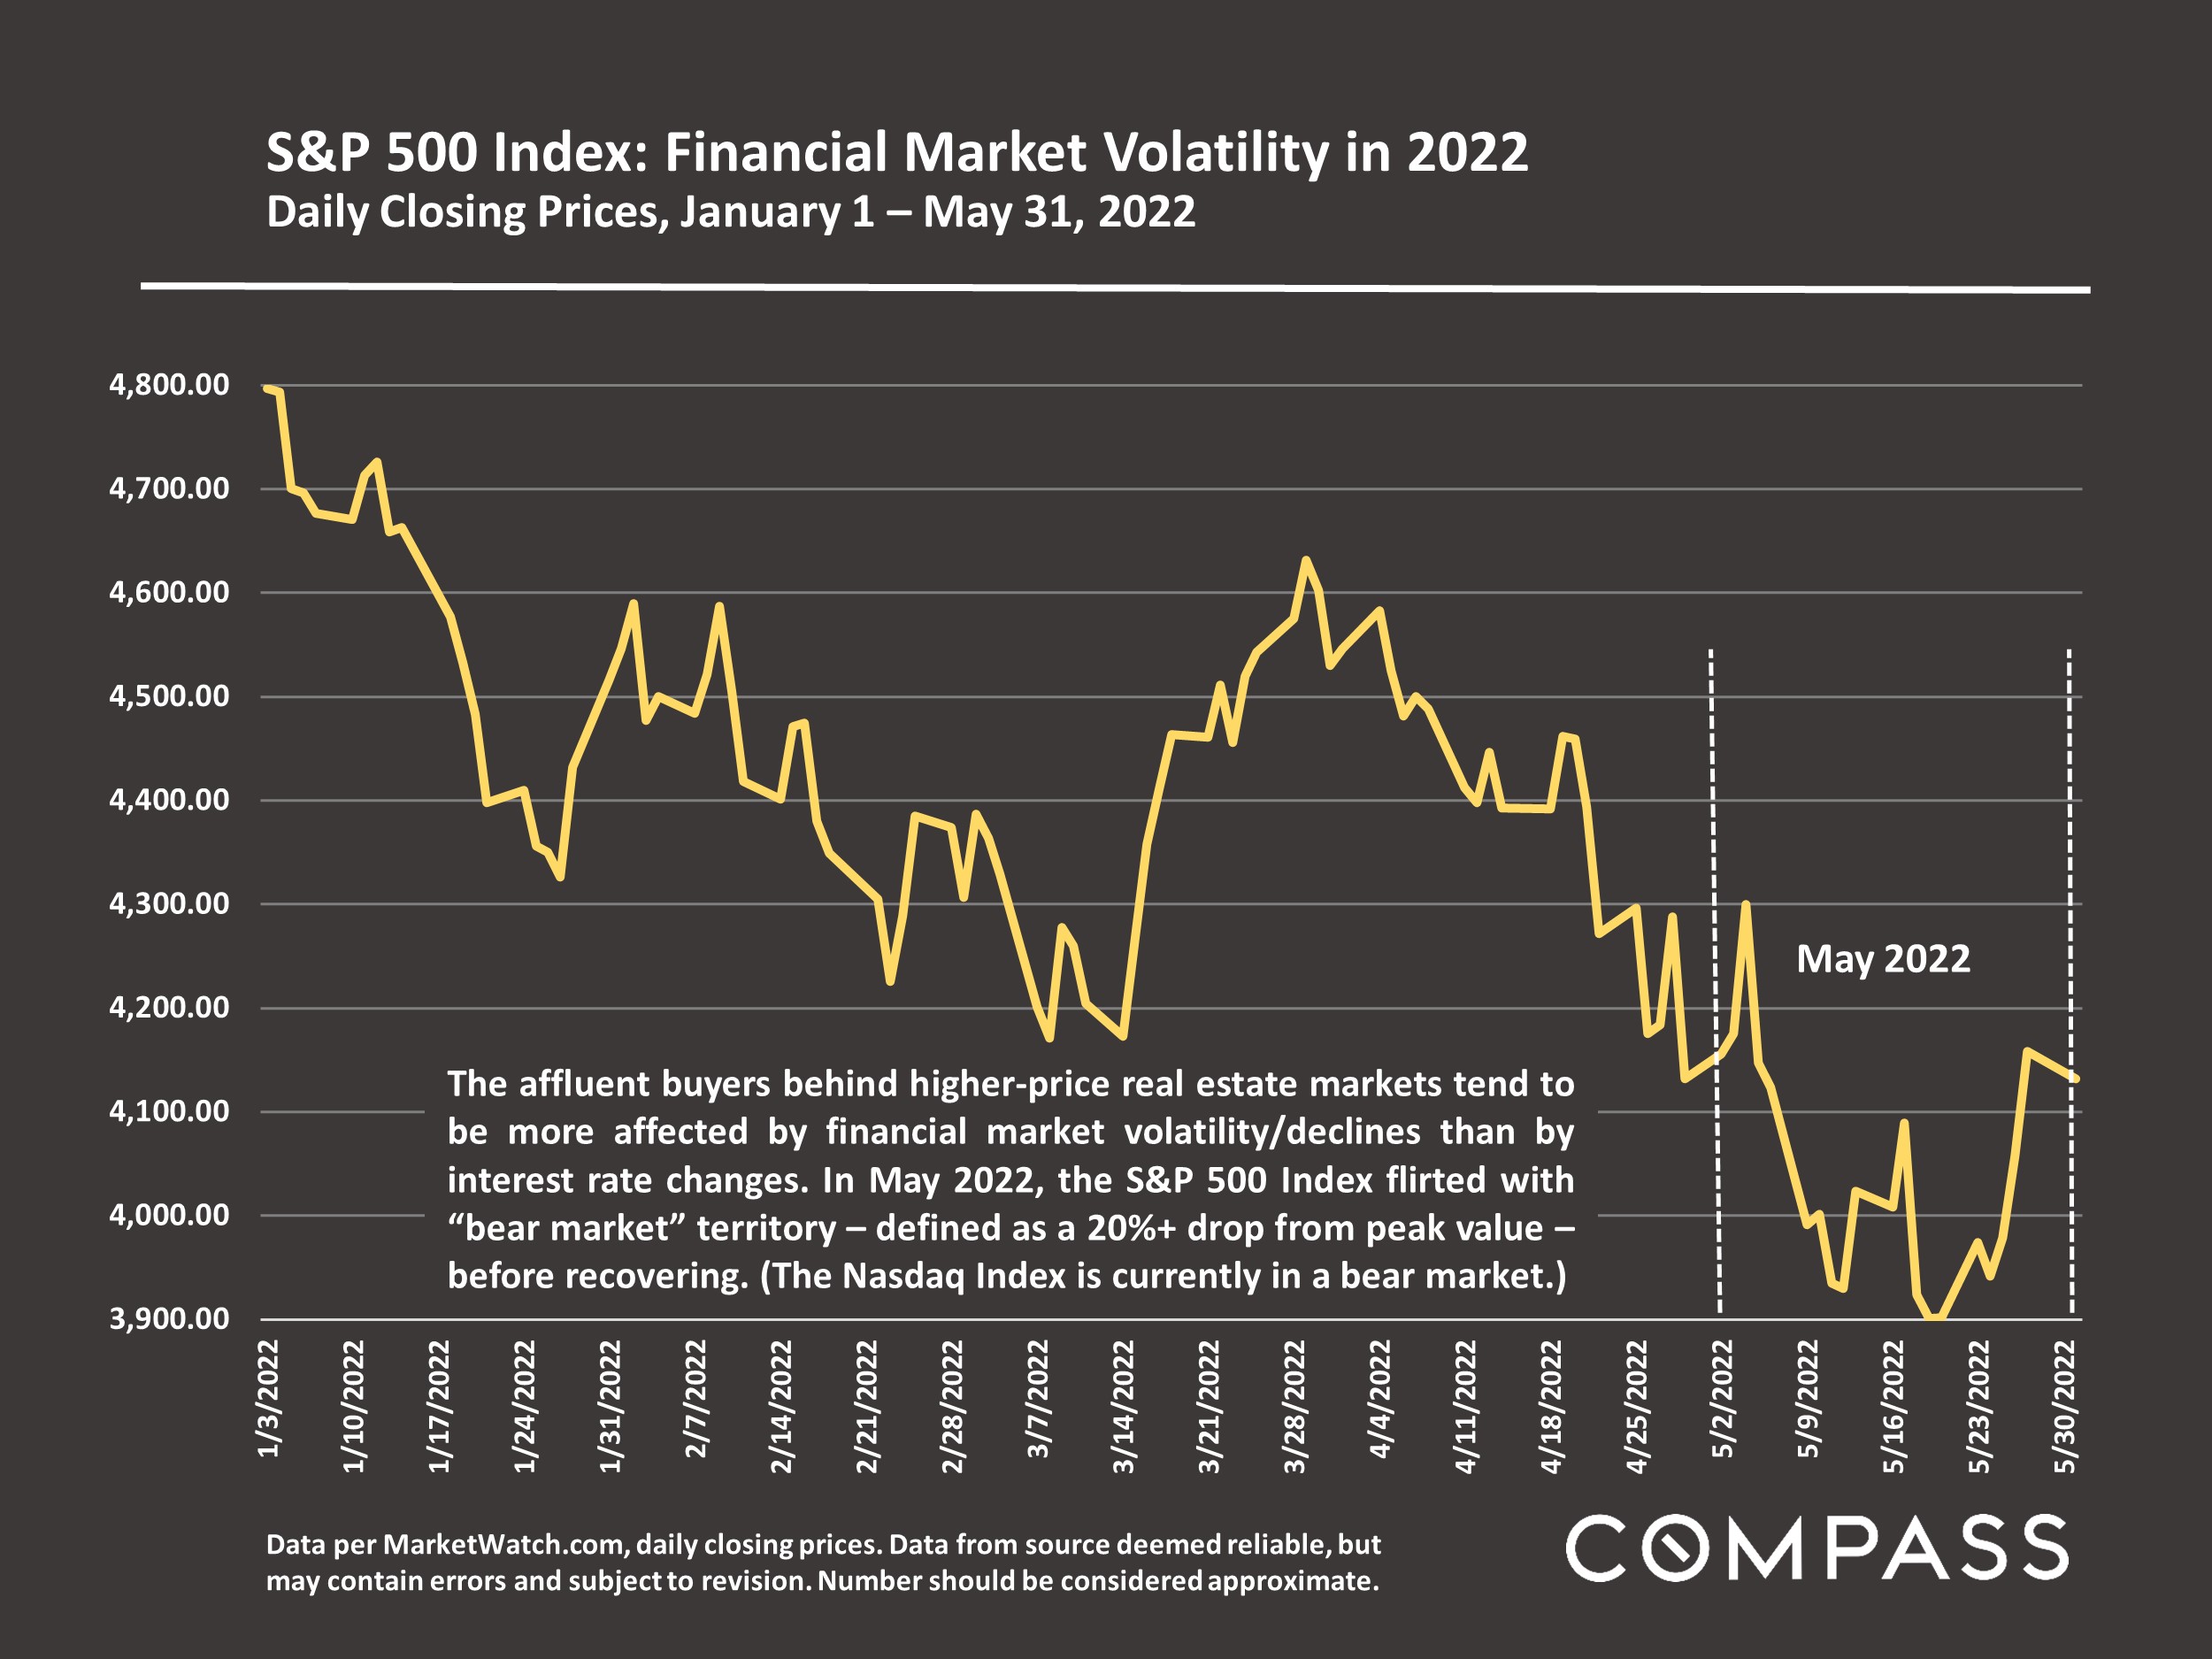 S&P 500 Index: Financial Market Volatility in 2022